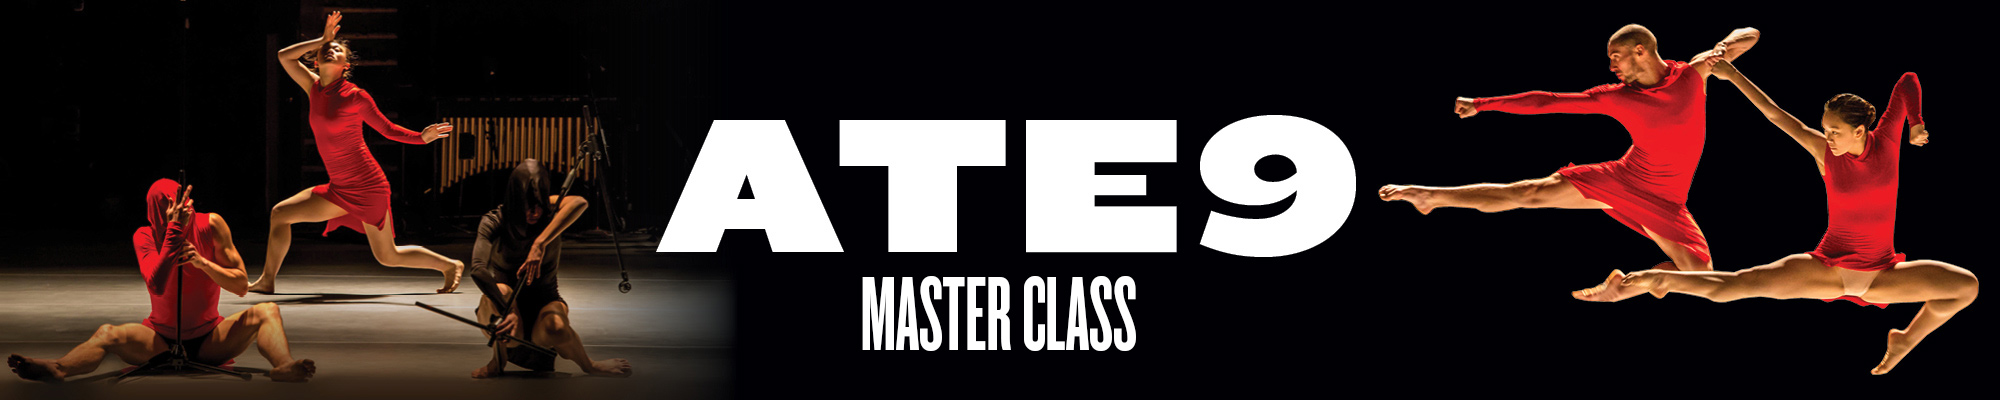 Ate9 Master Class